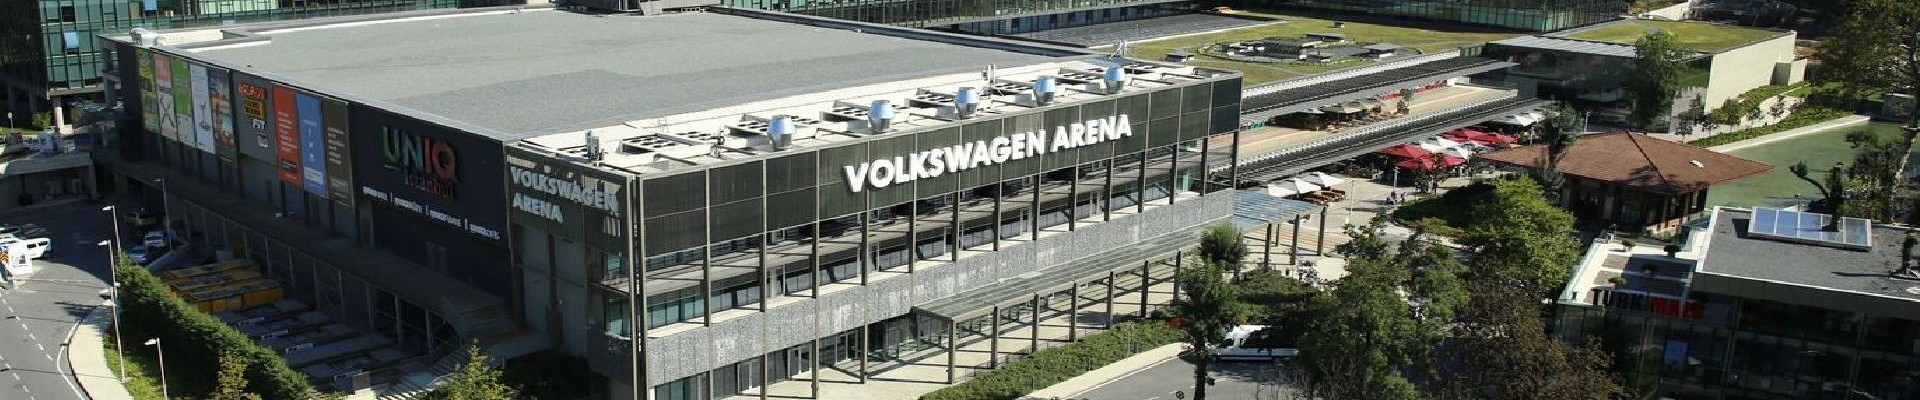 Volkswagen Arena Konser ve Etkinlik Biletleri